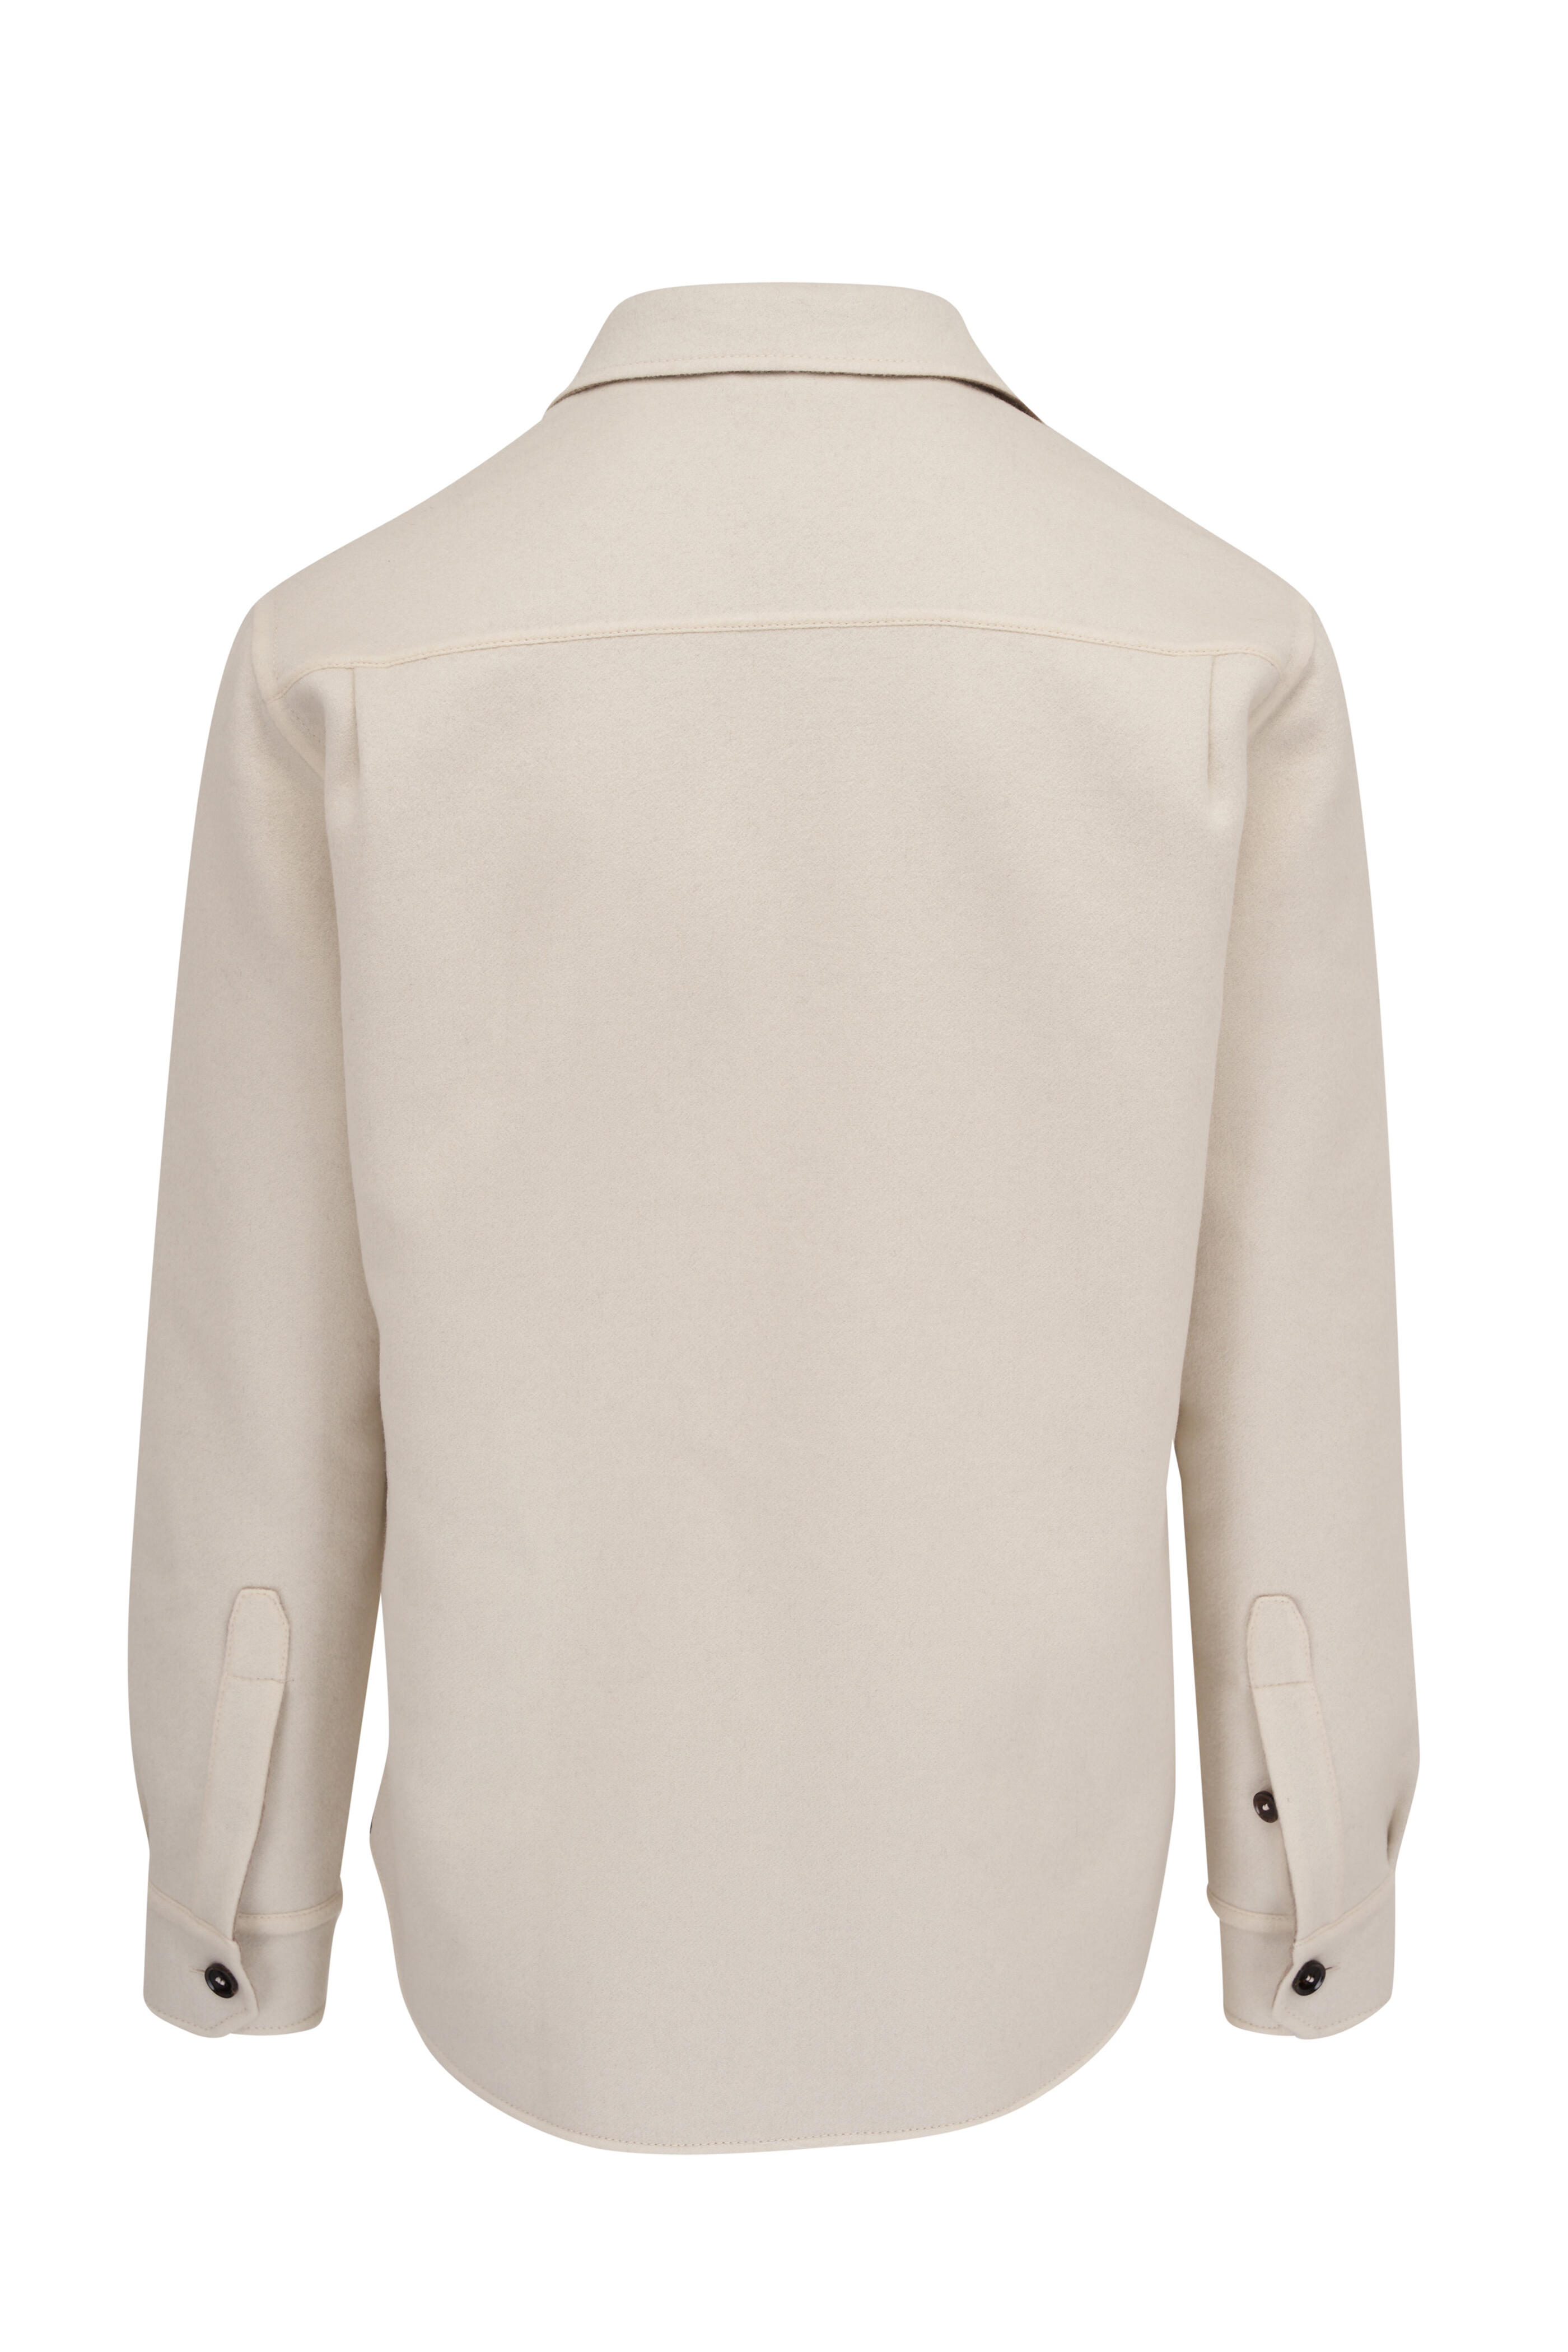 Brioni - Light Beige Cashmere Overshirt | Mitchell Stores